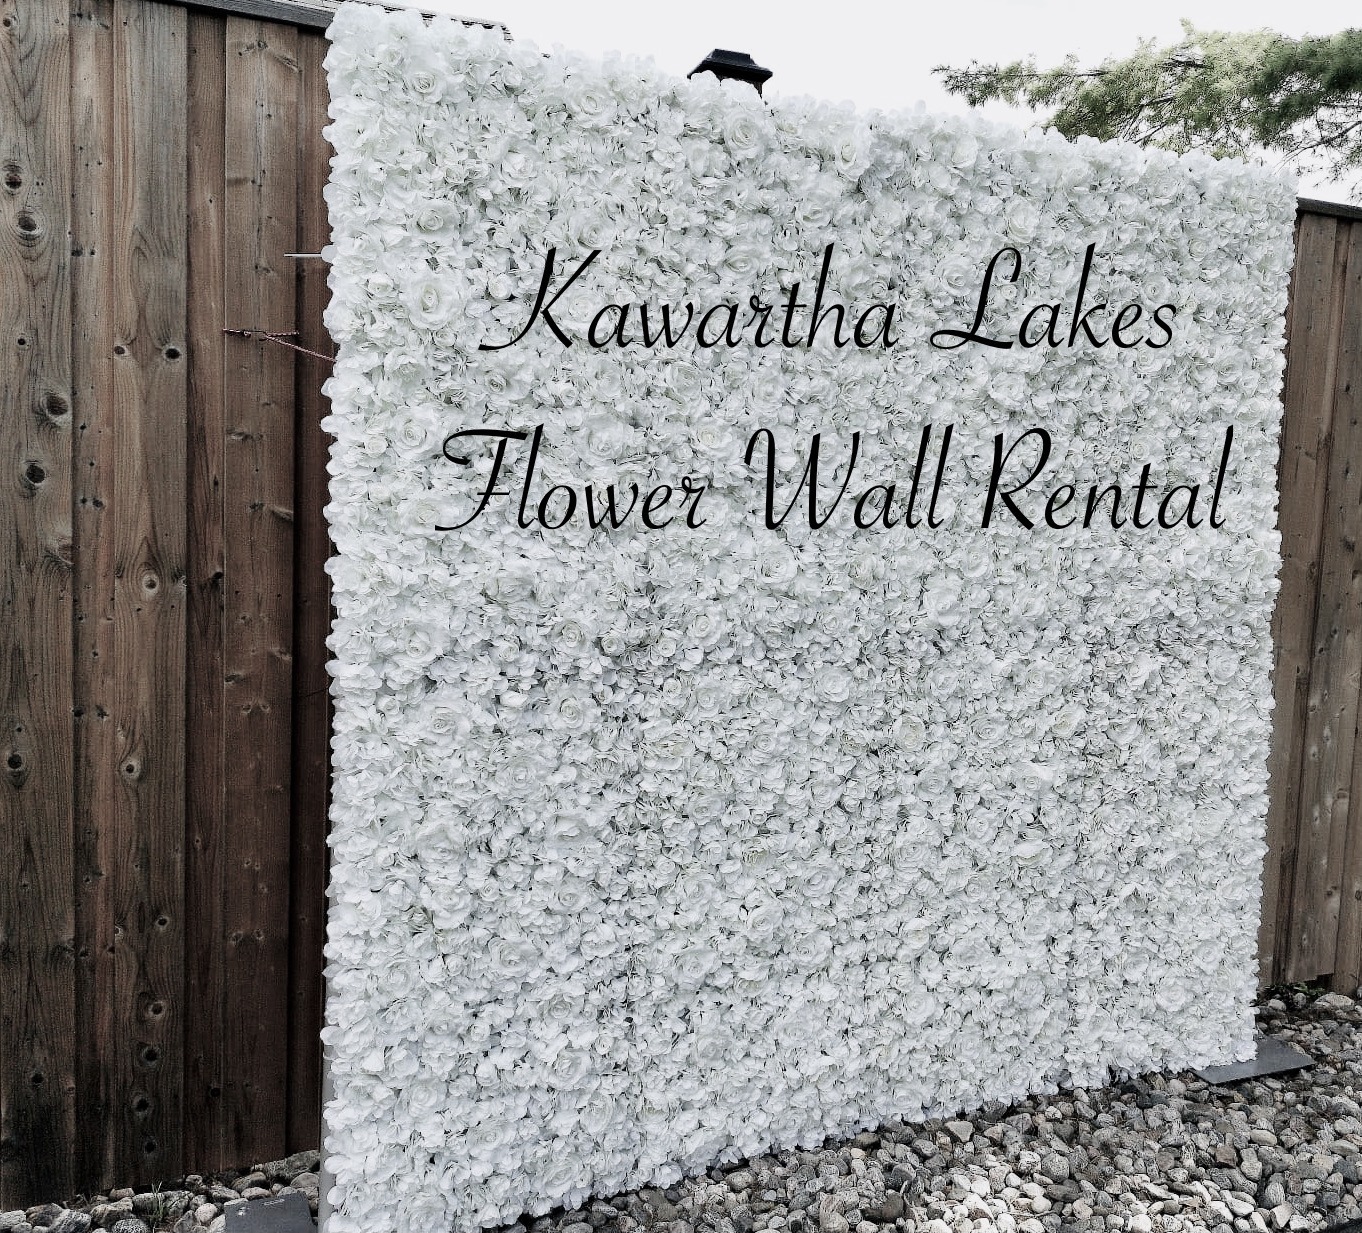 kawartha lakes flower wall rental company